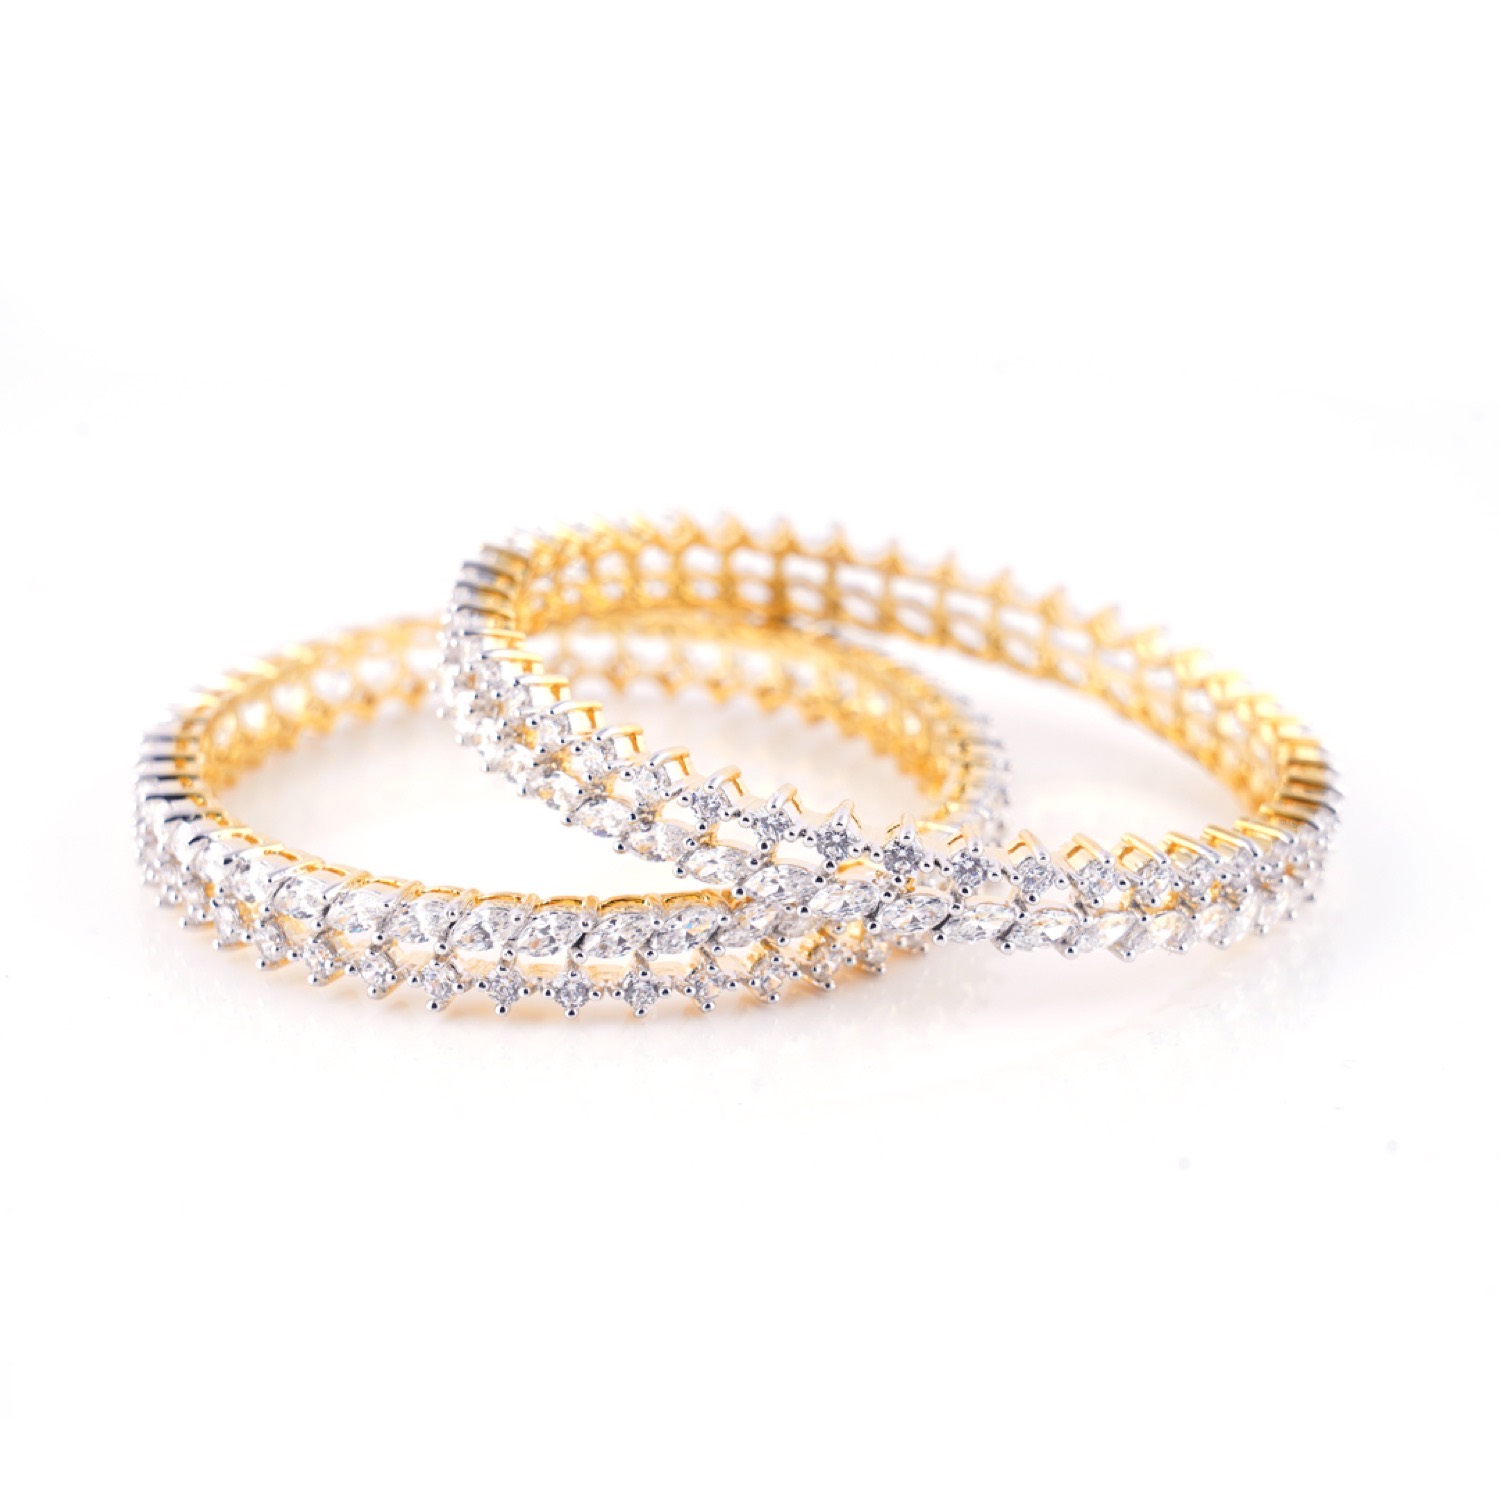 varam_bracelet_and_bangle_marquise_and_round_cut_white_stone_set_of_two_gold_coated_silver_bangle-1